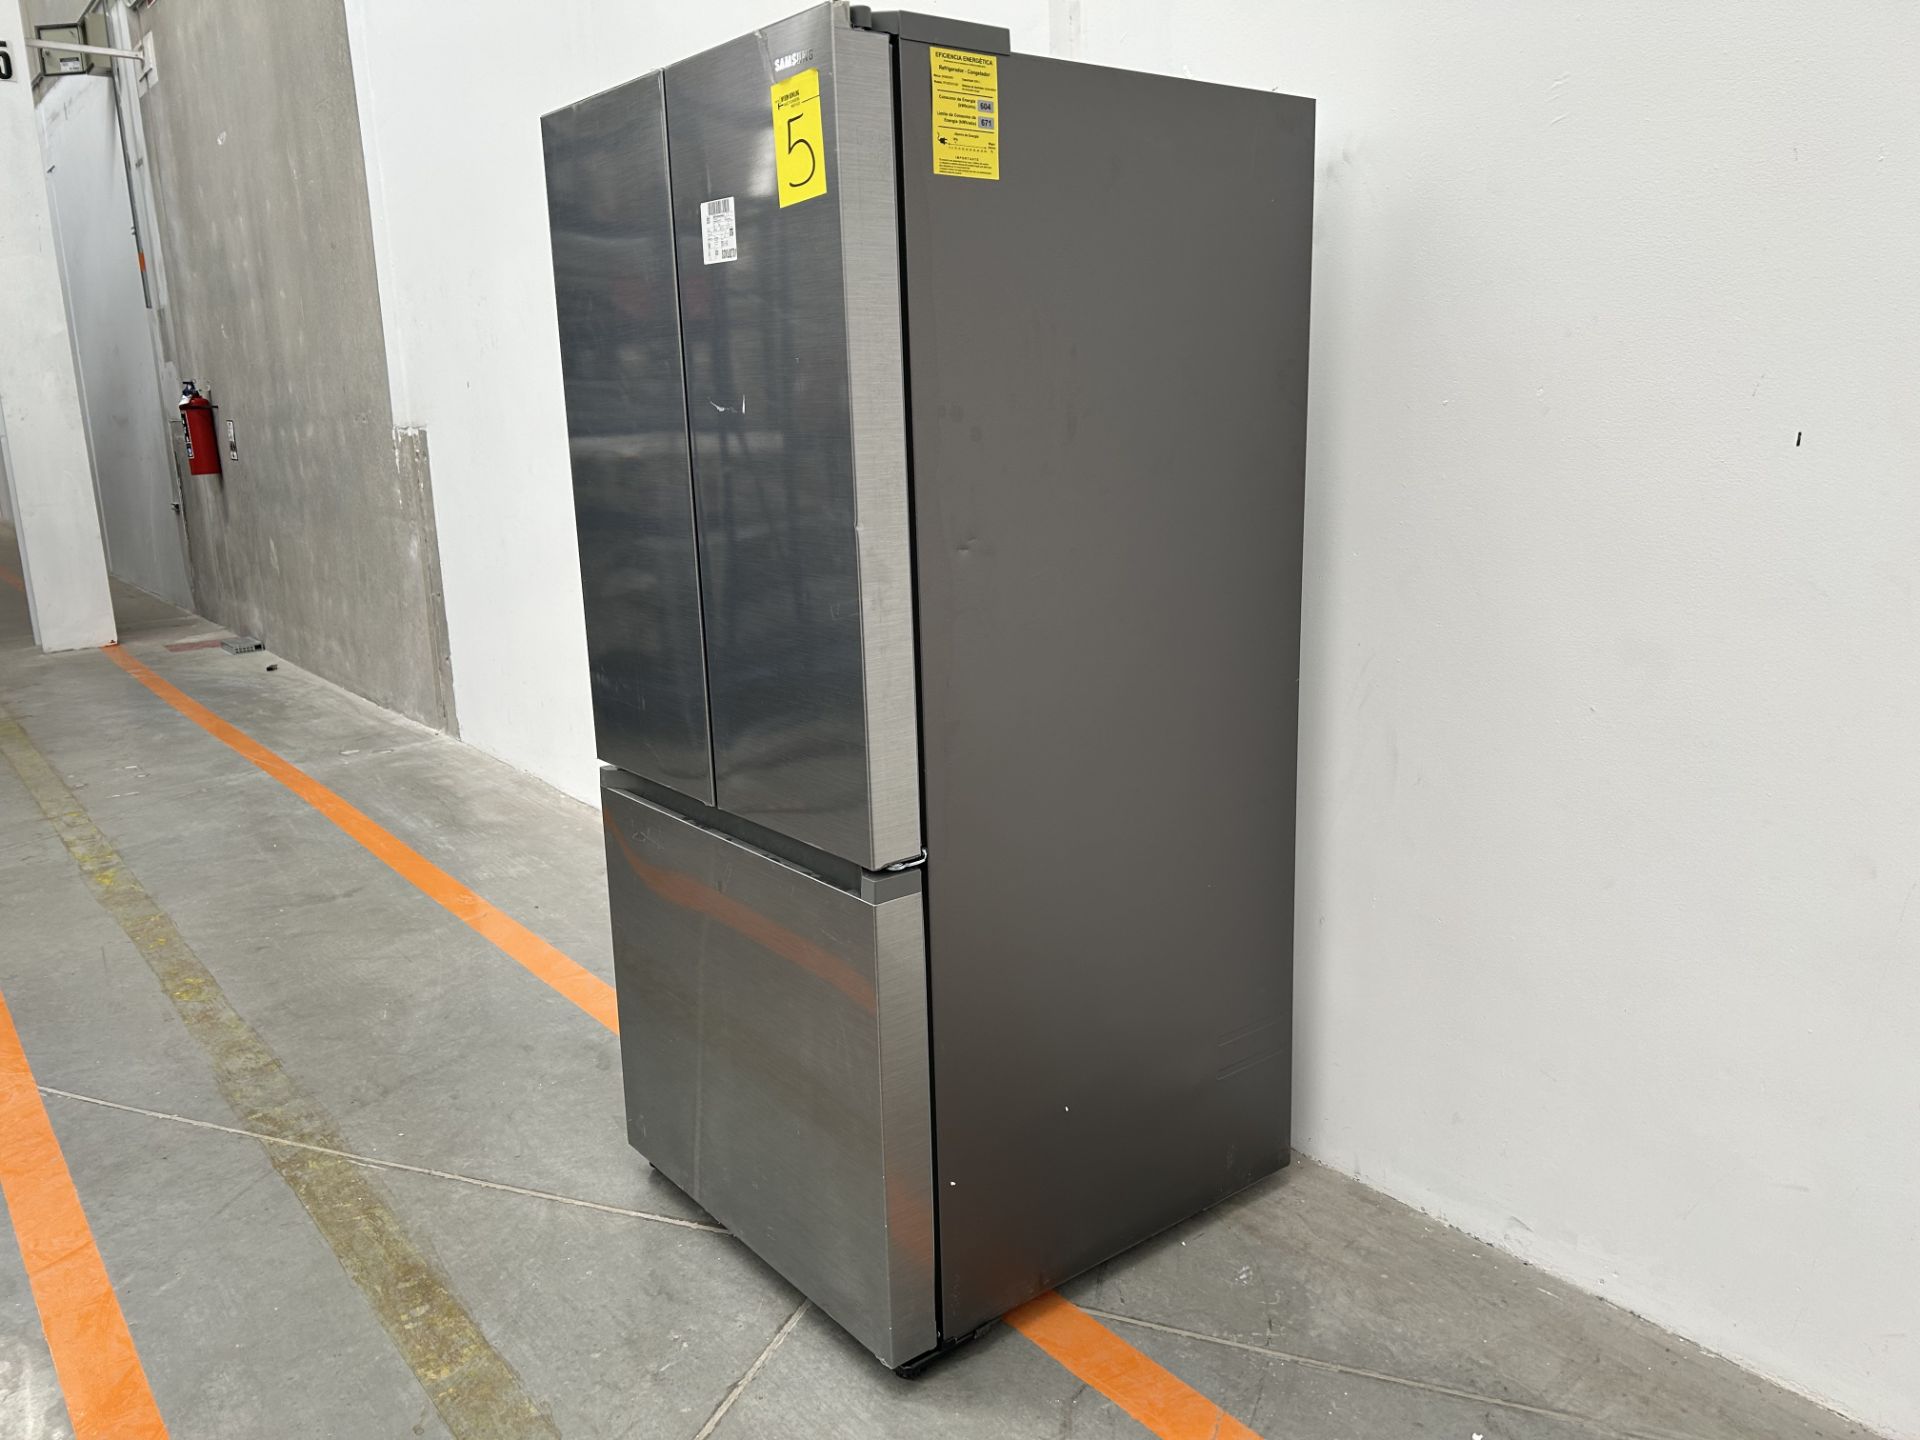 (NUEVO) Refrigerador Marca SAMSUNG, Modelo RF25C5151S9, Serie 00129J, Color GRIS - Image 2 of 4